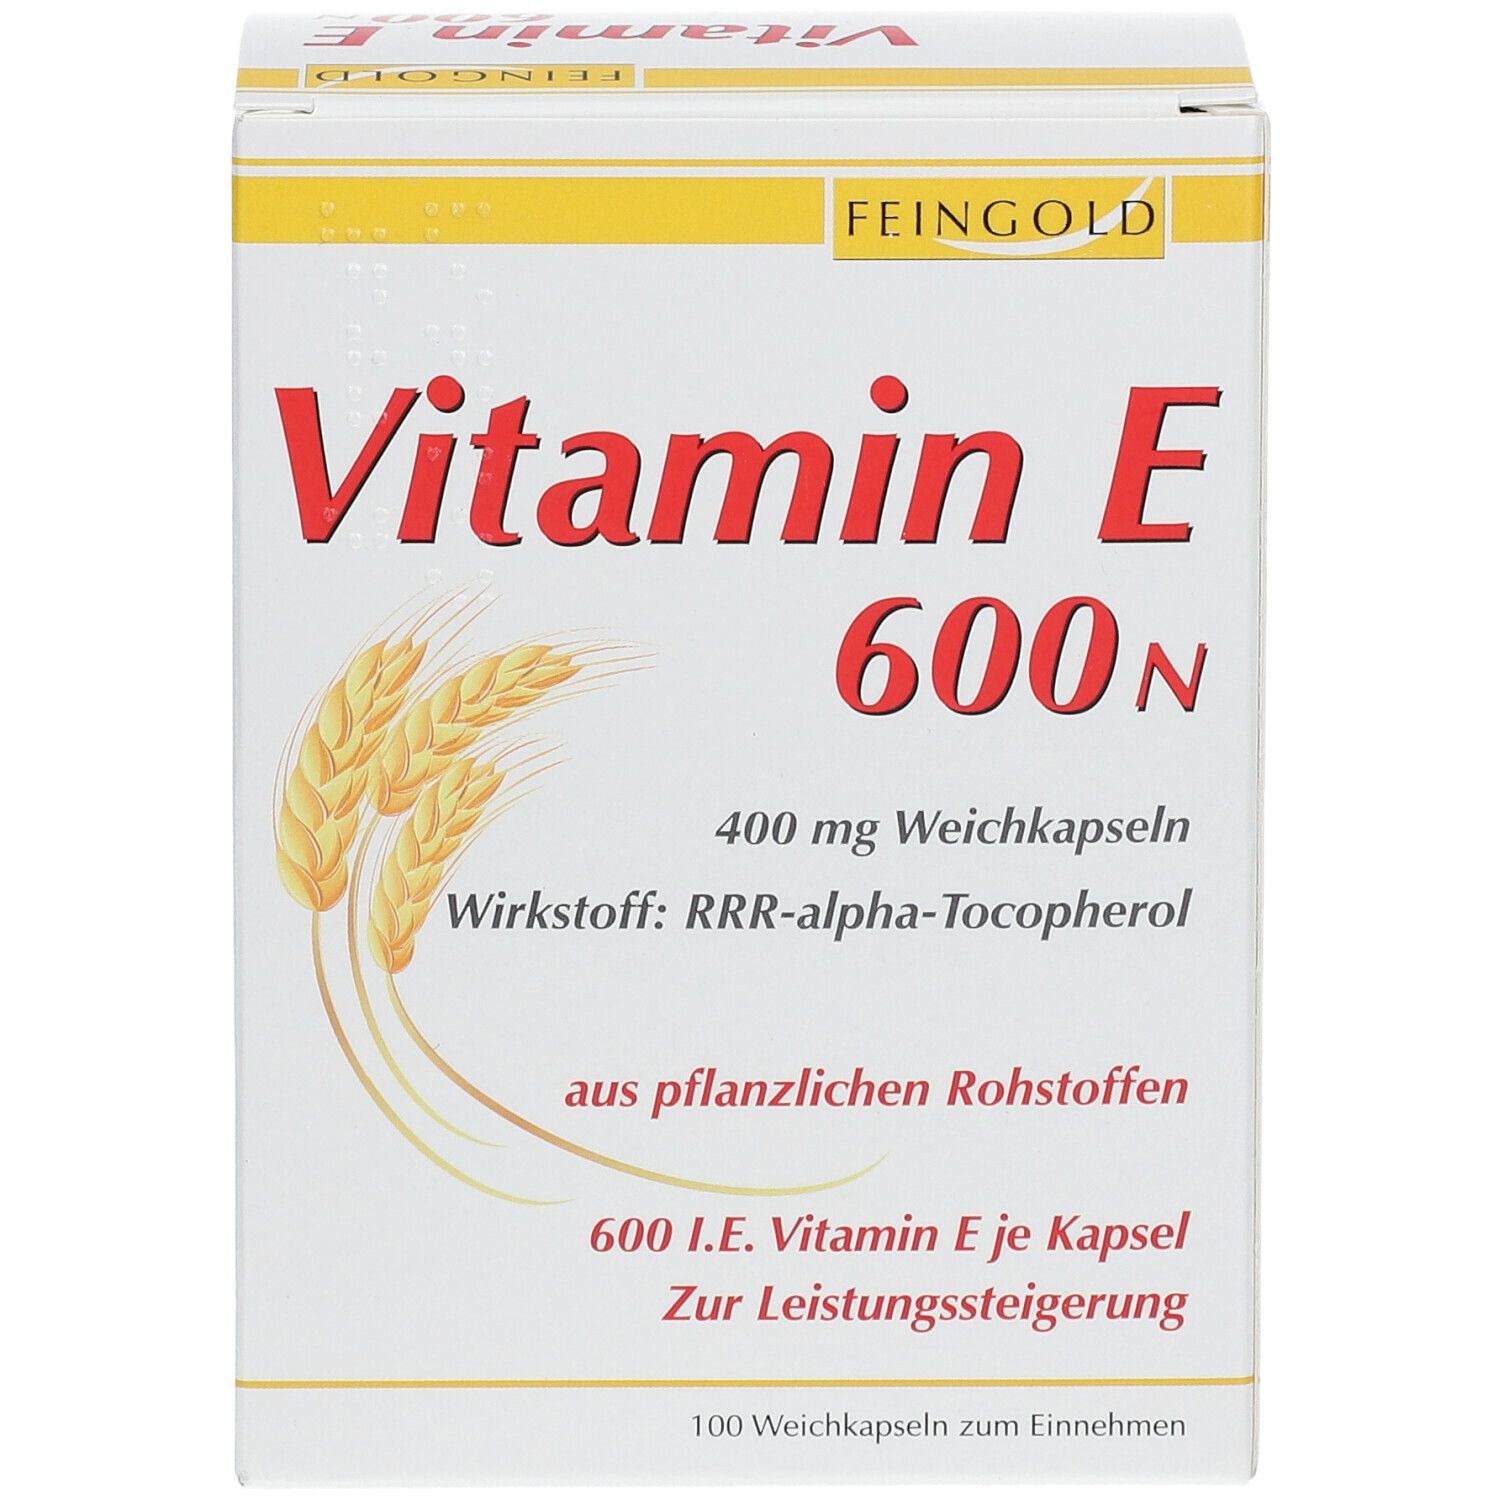 Vitamin E 600N